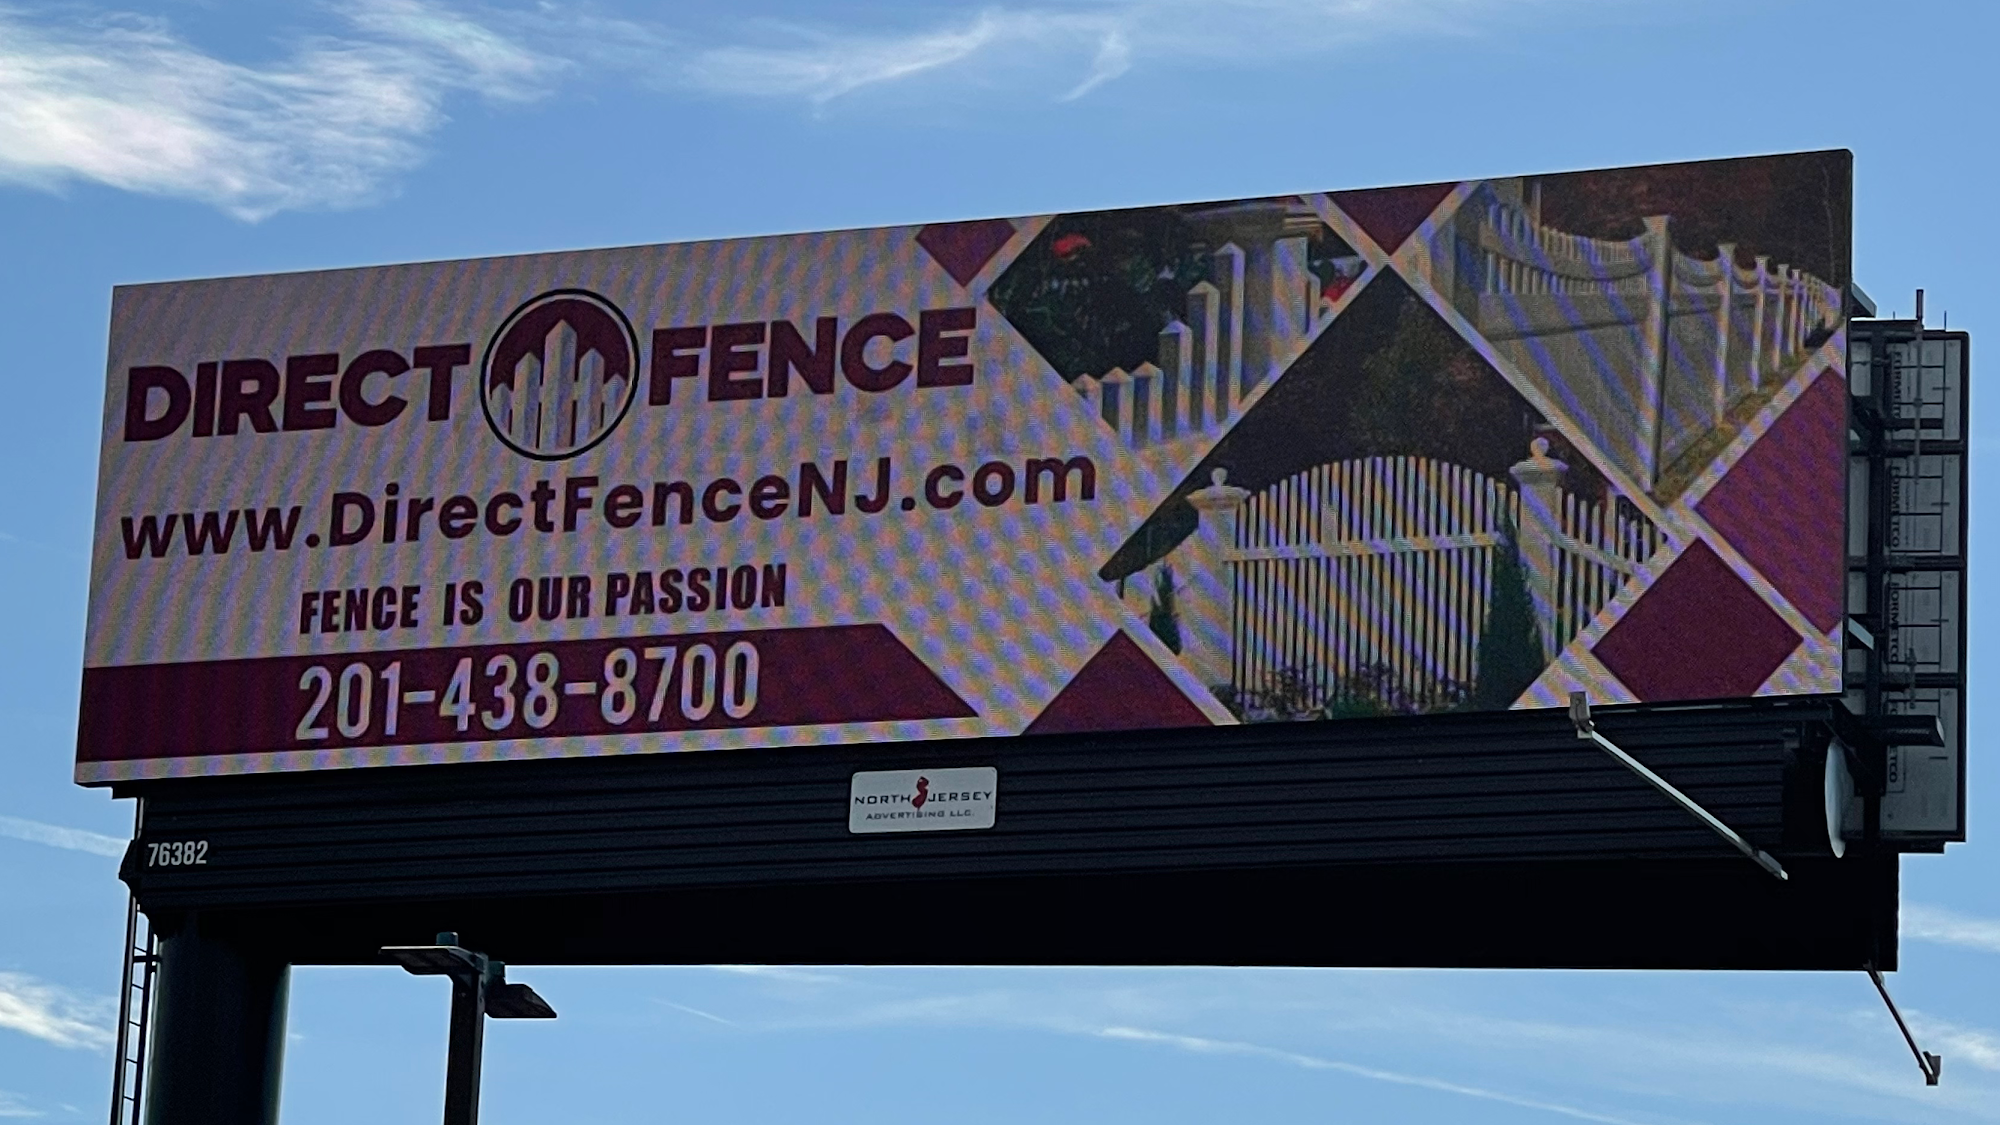 Direct Fence Distributors